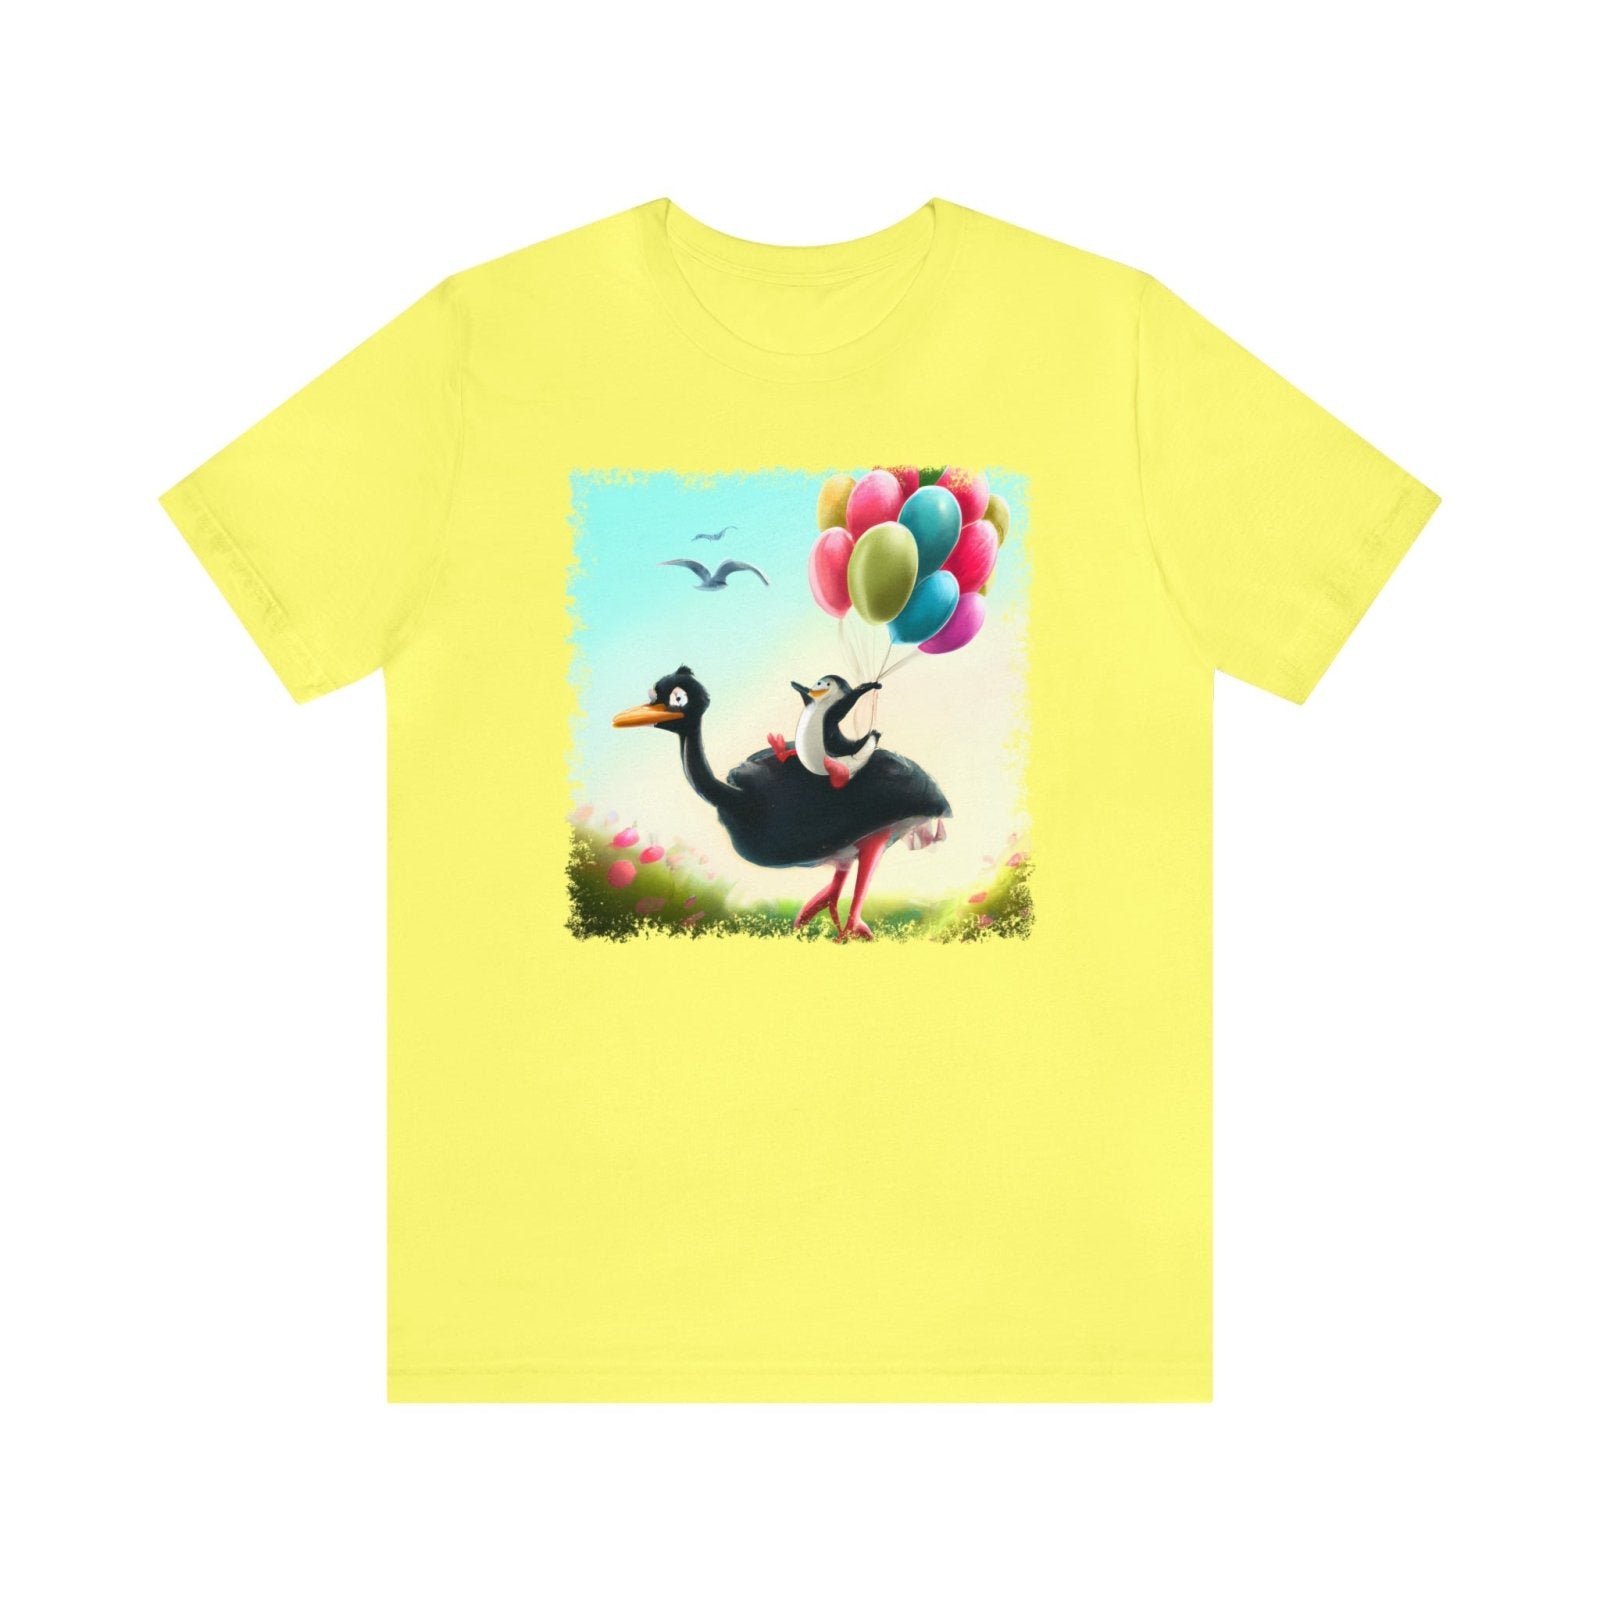 Ostrich Elevations Unisex T-Shirt, flying penguin shirt, flying ostrich apparel, penguin humor, Yellow - Subtle Blue M